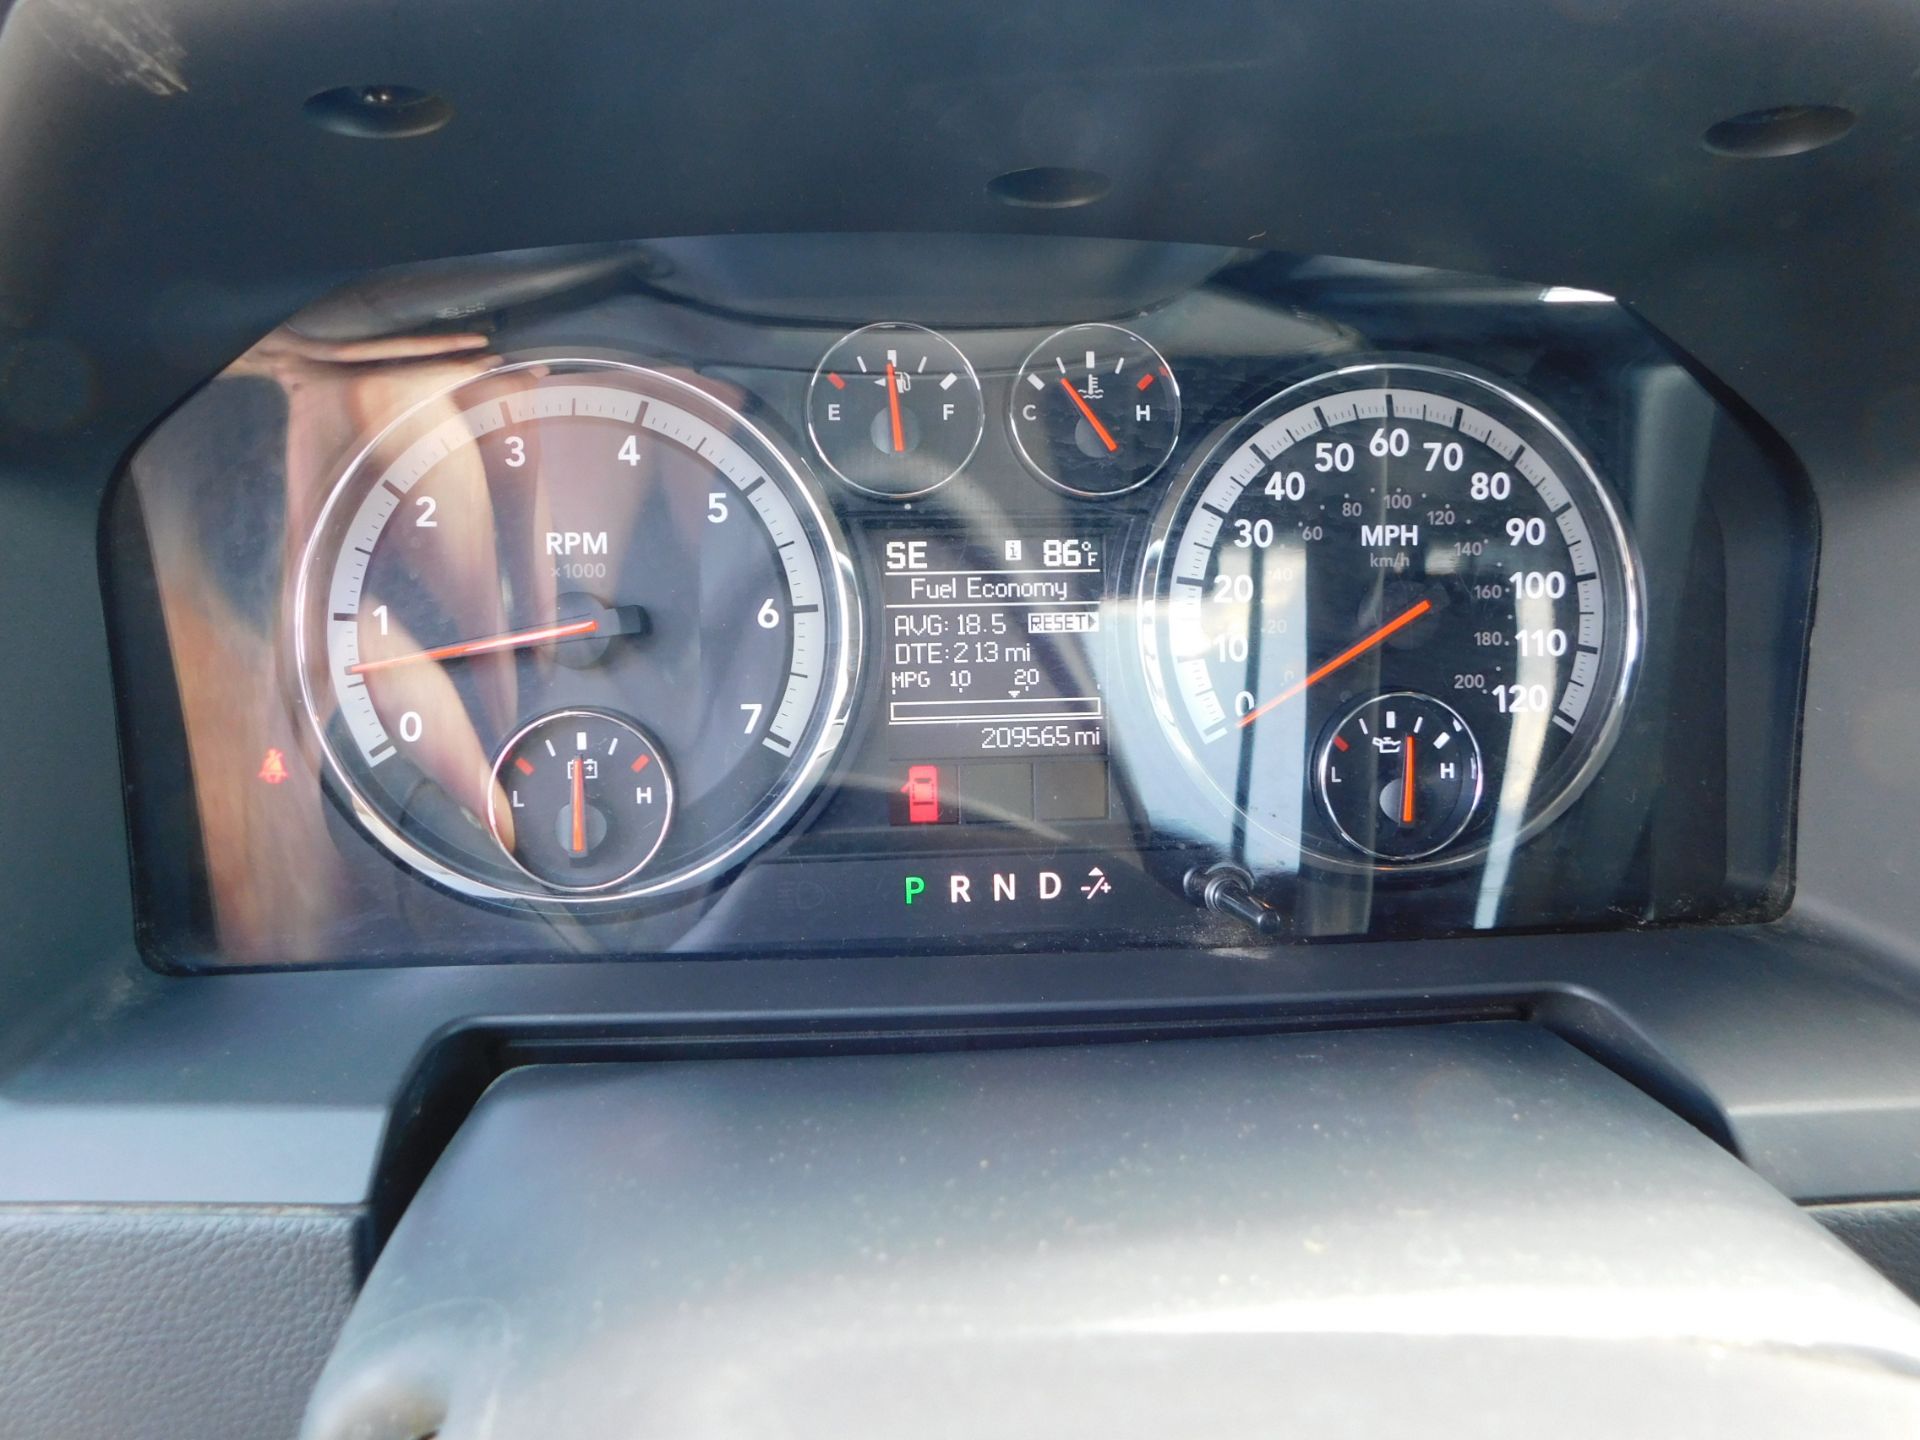 2012 Dodge Ram 1500 Pickup, Crew Cab, 6' Bed, Automatic, 4 WD, AM/FM,AC, PL, PW, Hemi 5.7 L - Image 30 of 53